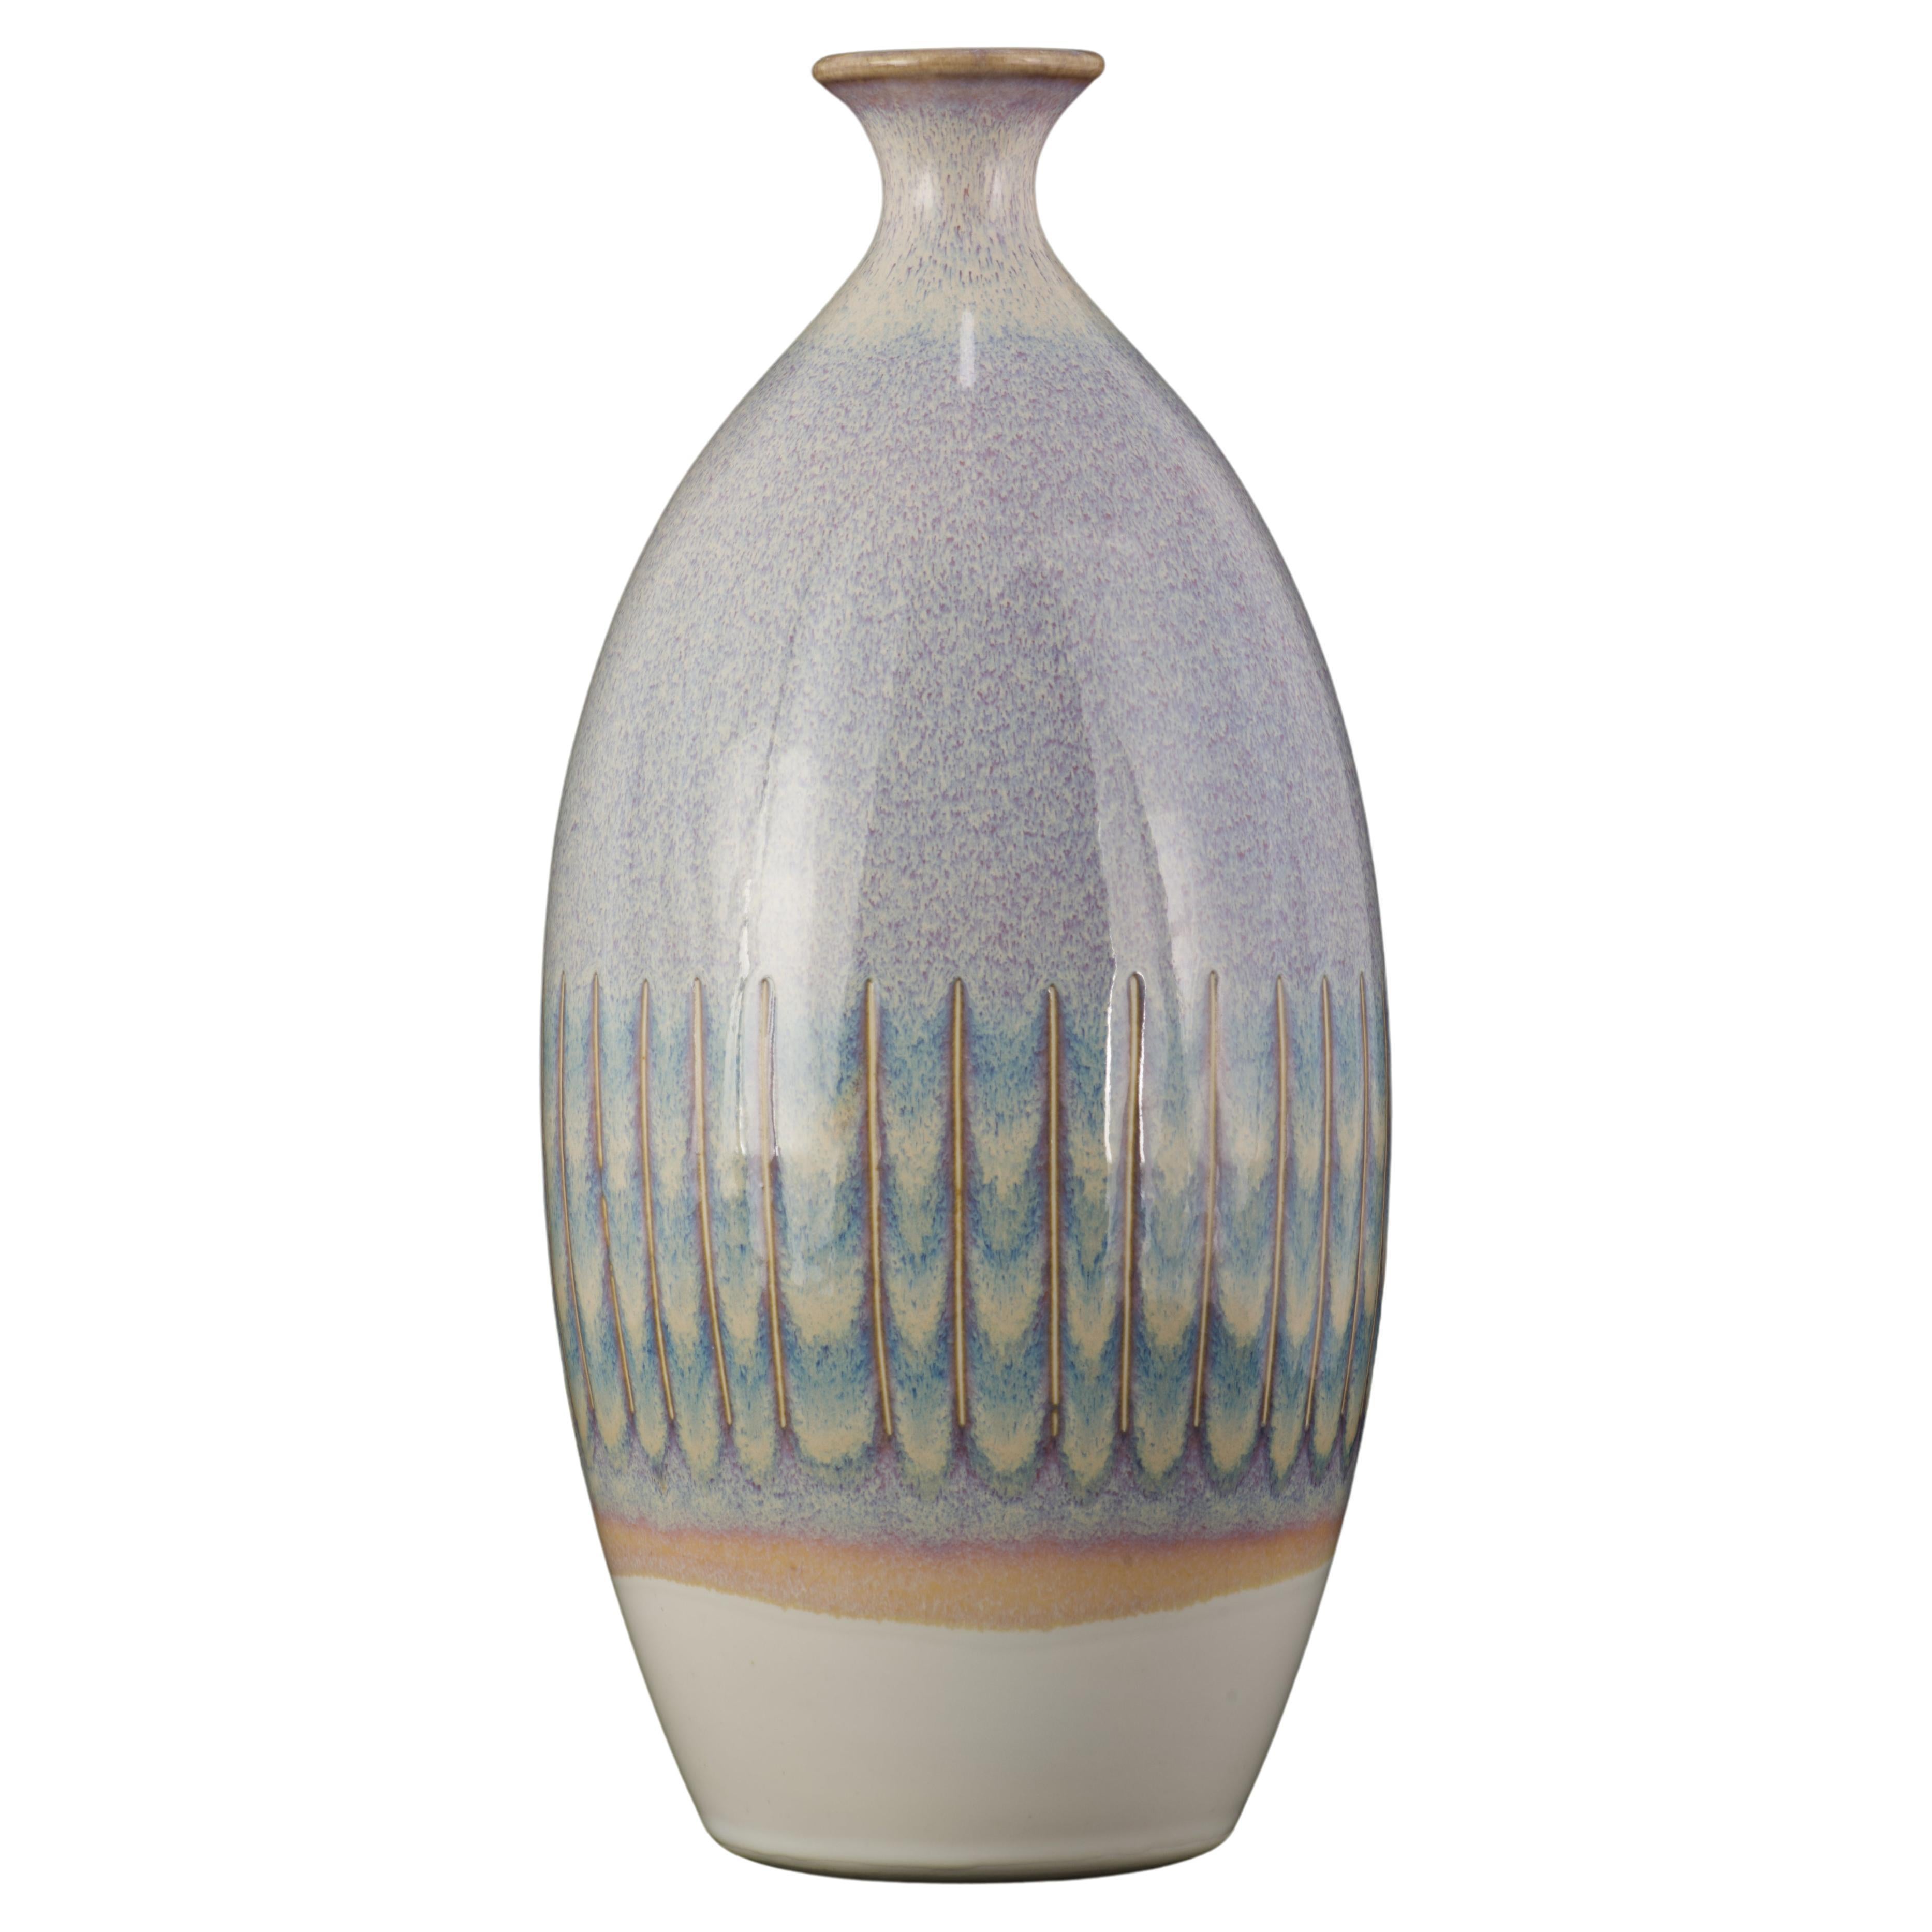 Handgedrehte Studio-Keramik-Vase, orange und olivfarbene Glasur